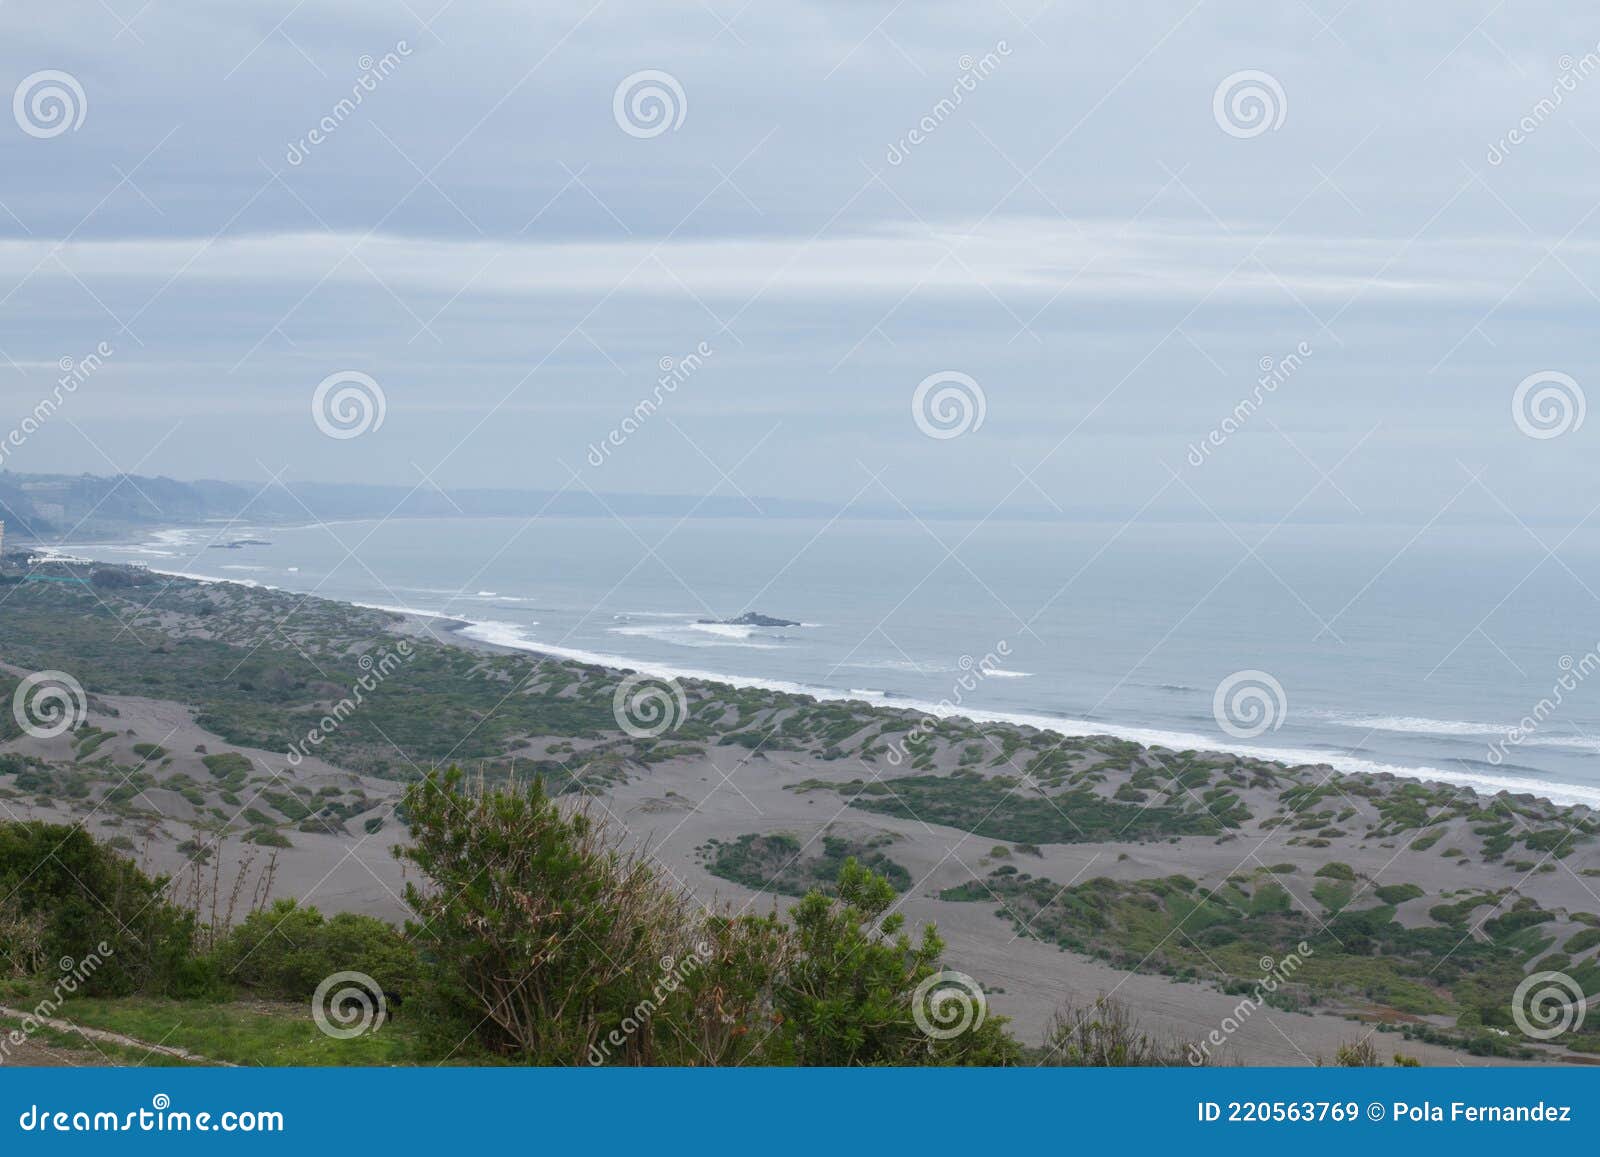 view of the pacific ocean at rocas de santo domingo beach